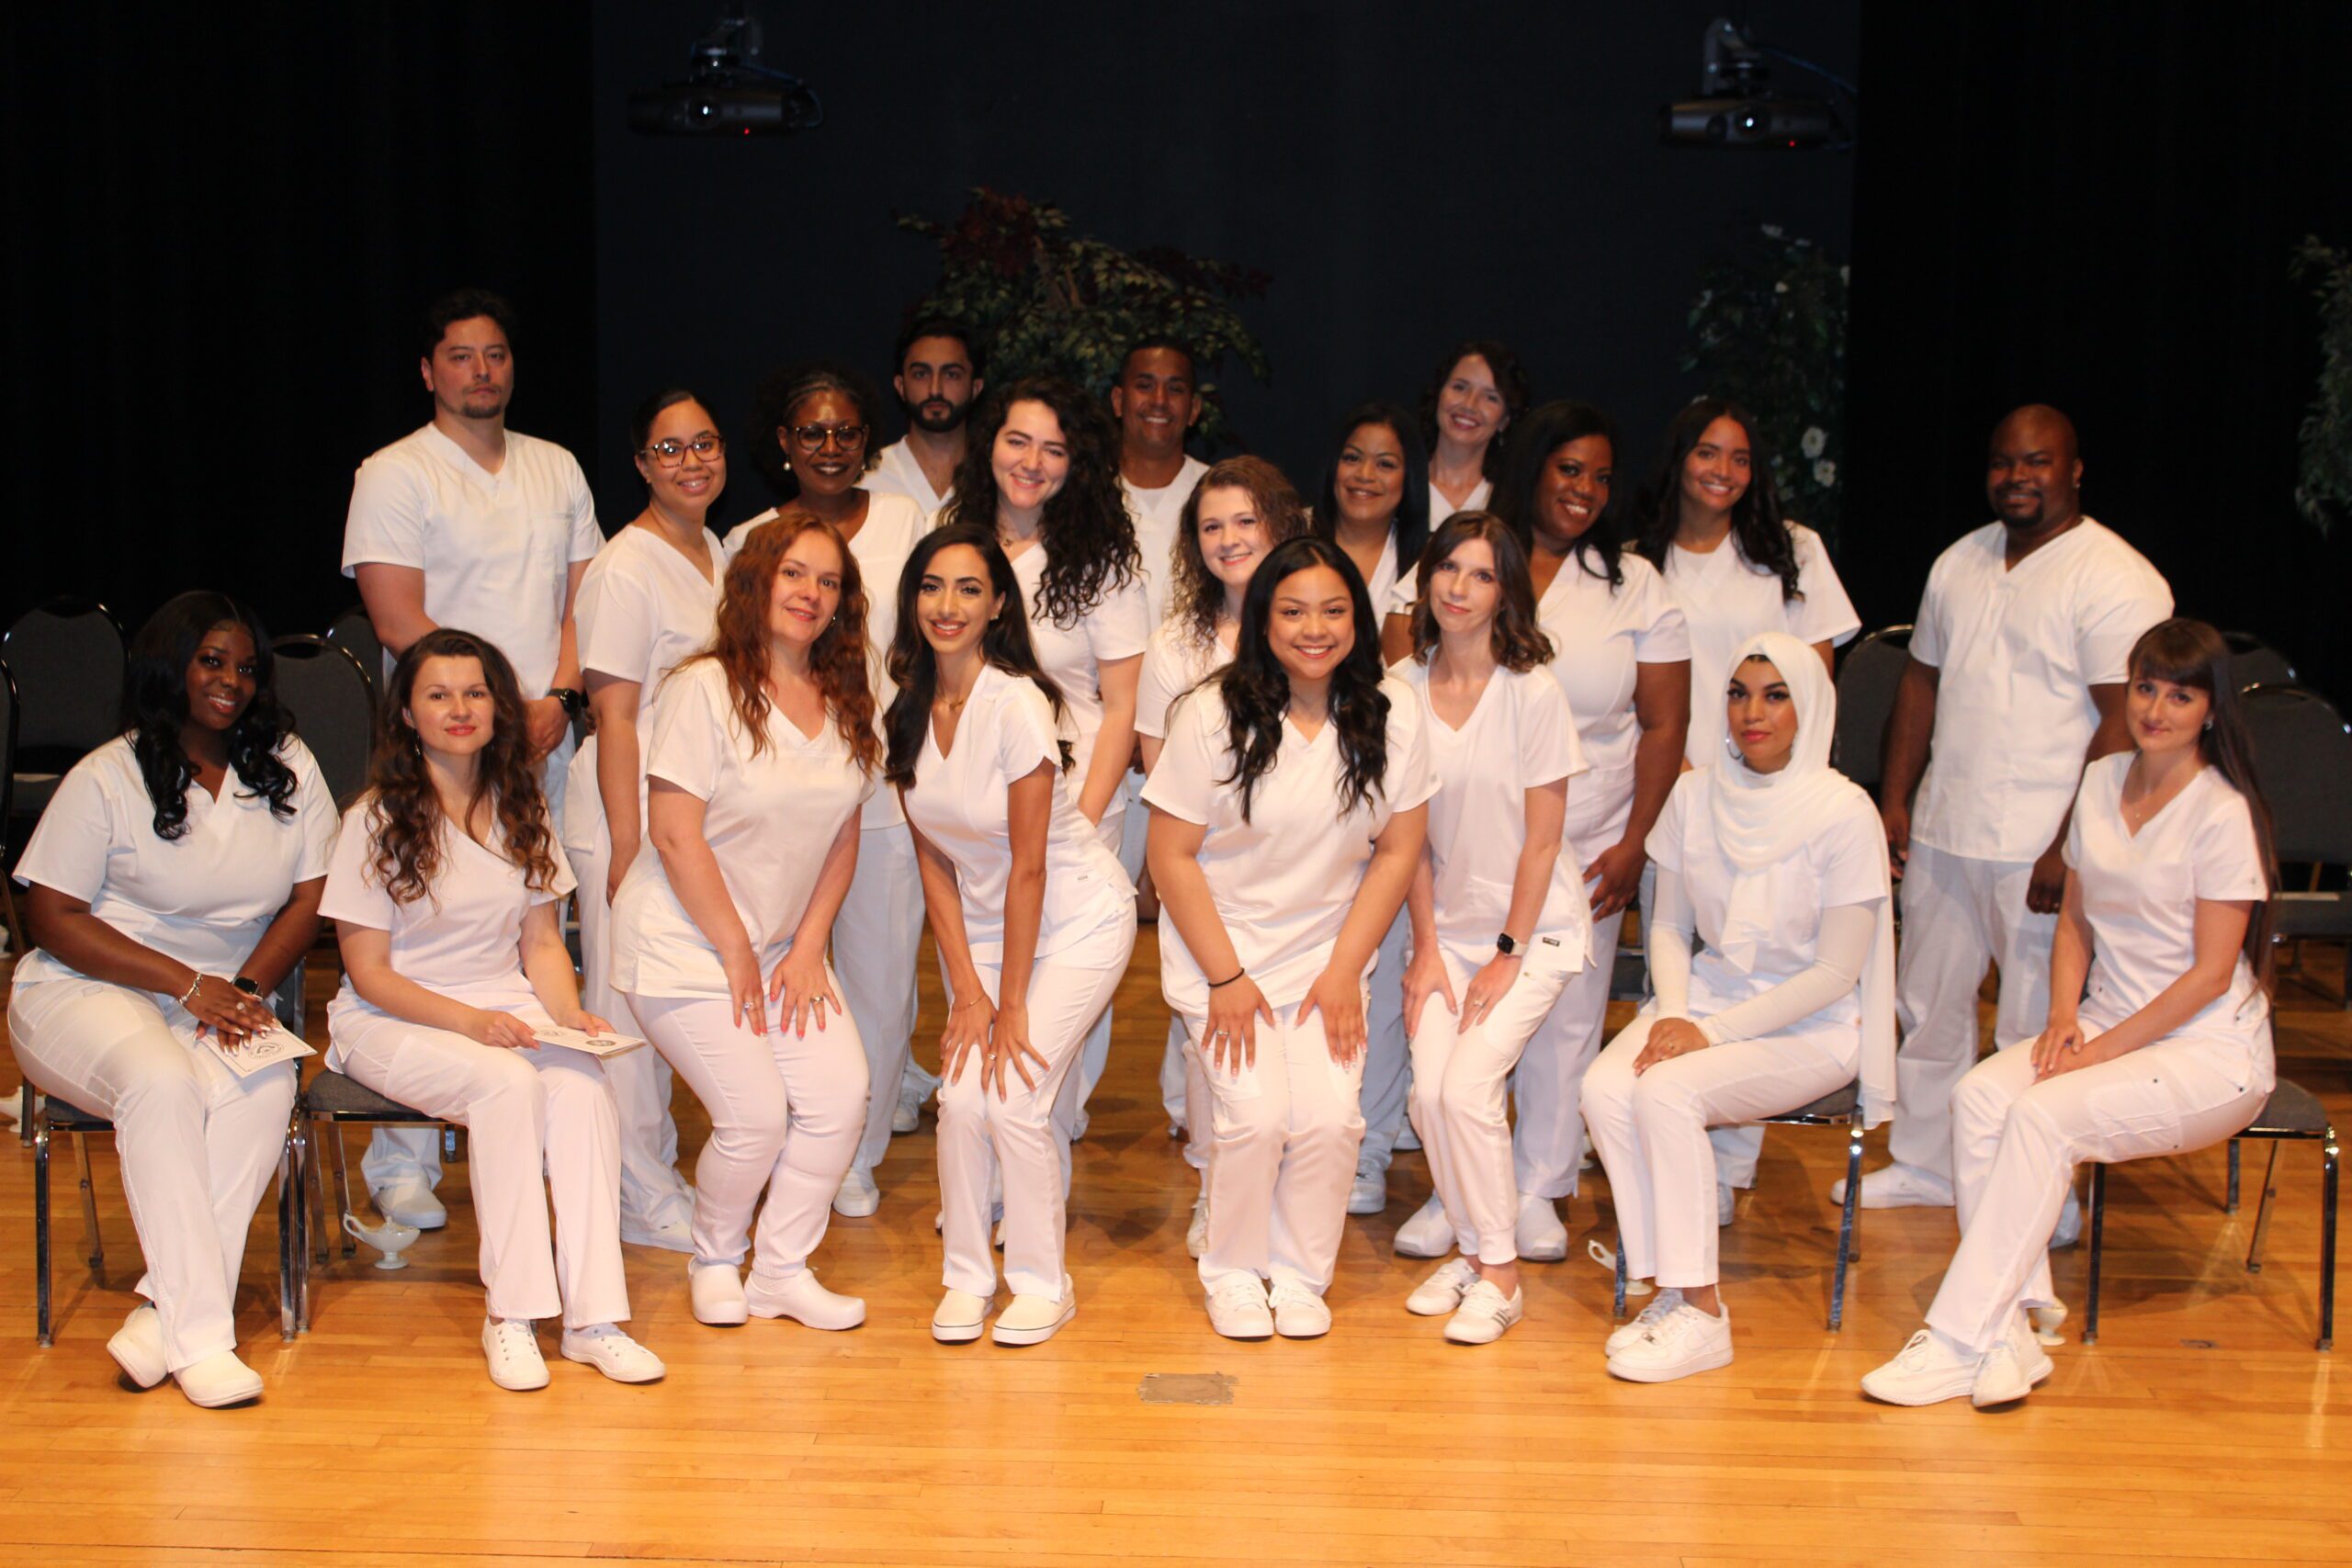 20 graduates of the Nurse Education Program